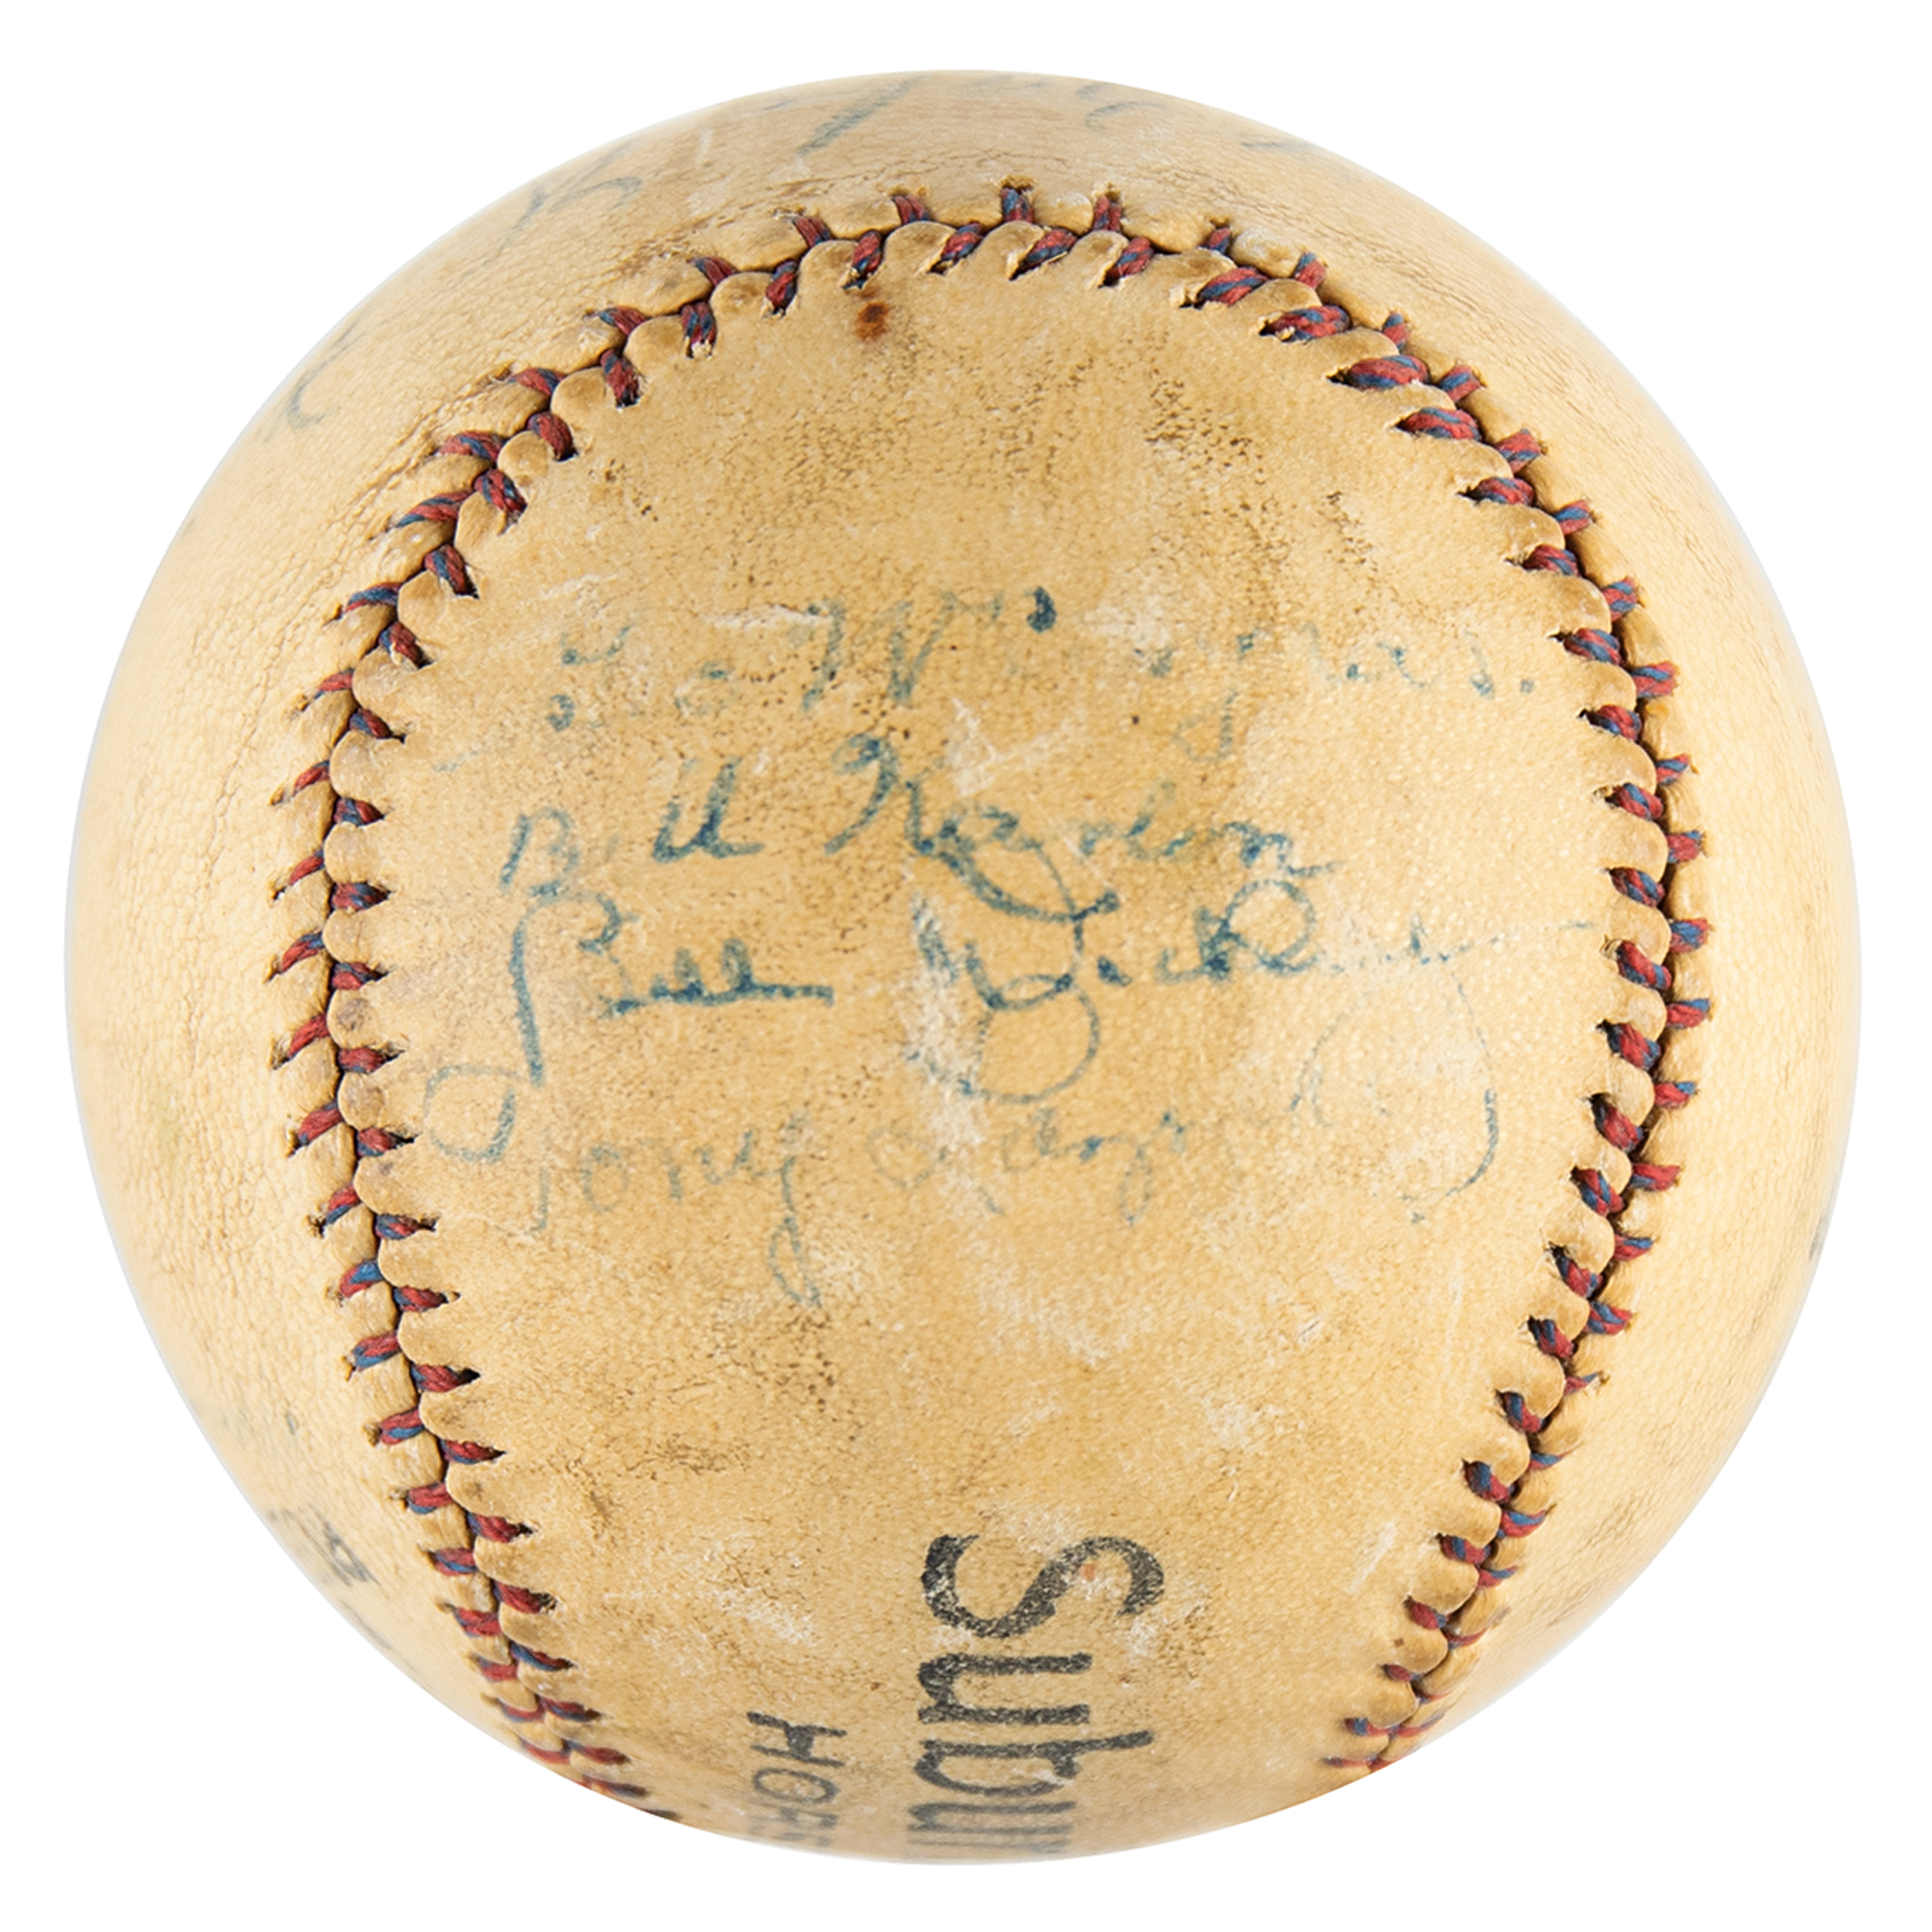 Babe Ruth and Lou Gehrig Signed Baseball